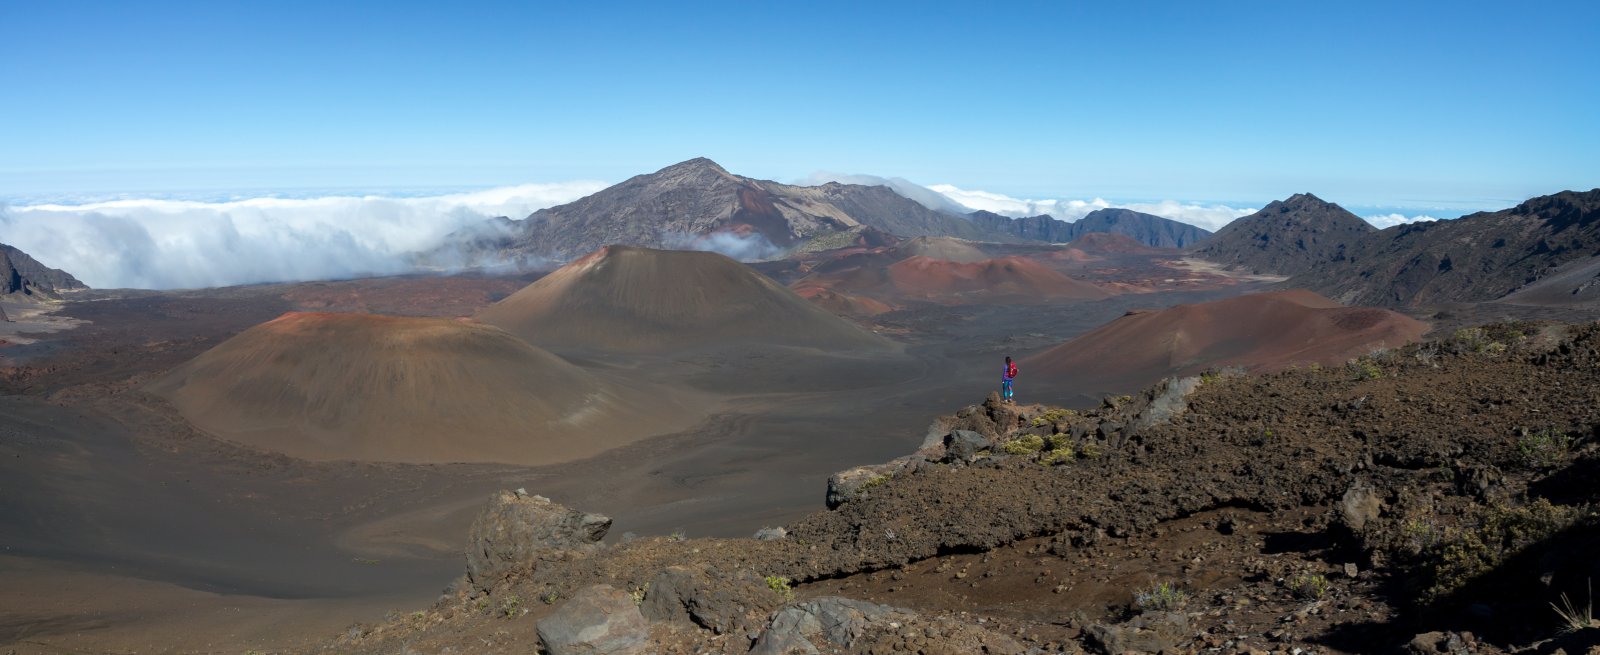 Hiking the Haleakala Summit Trails is a Maui must do activity.